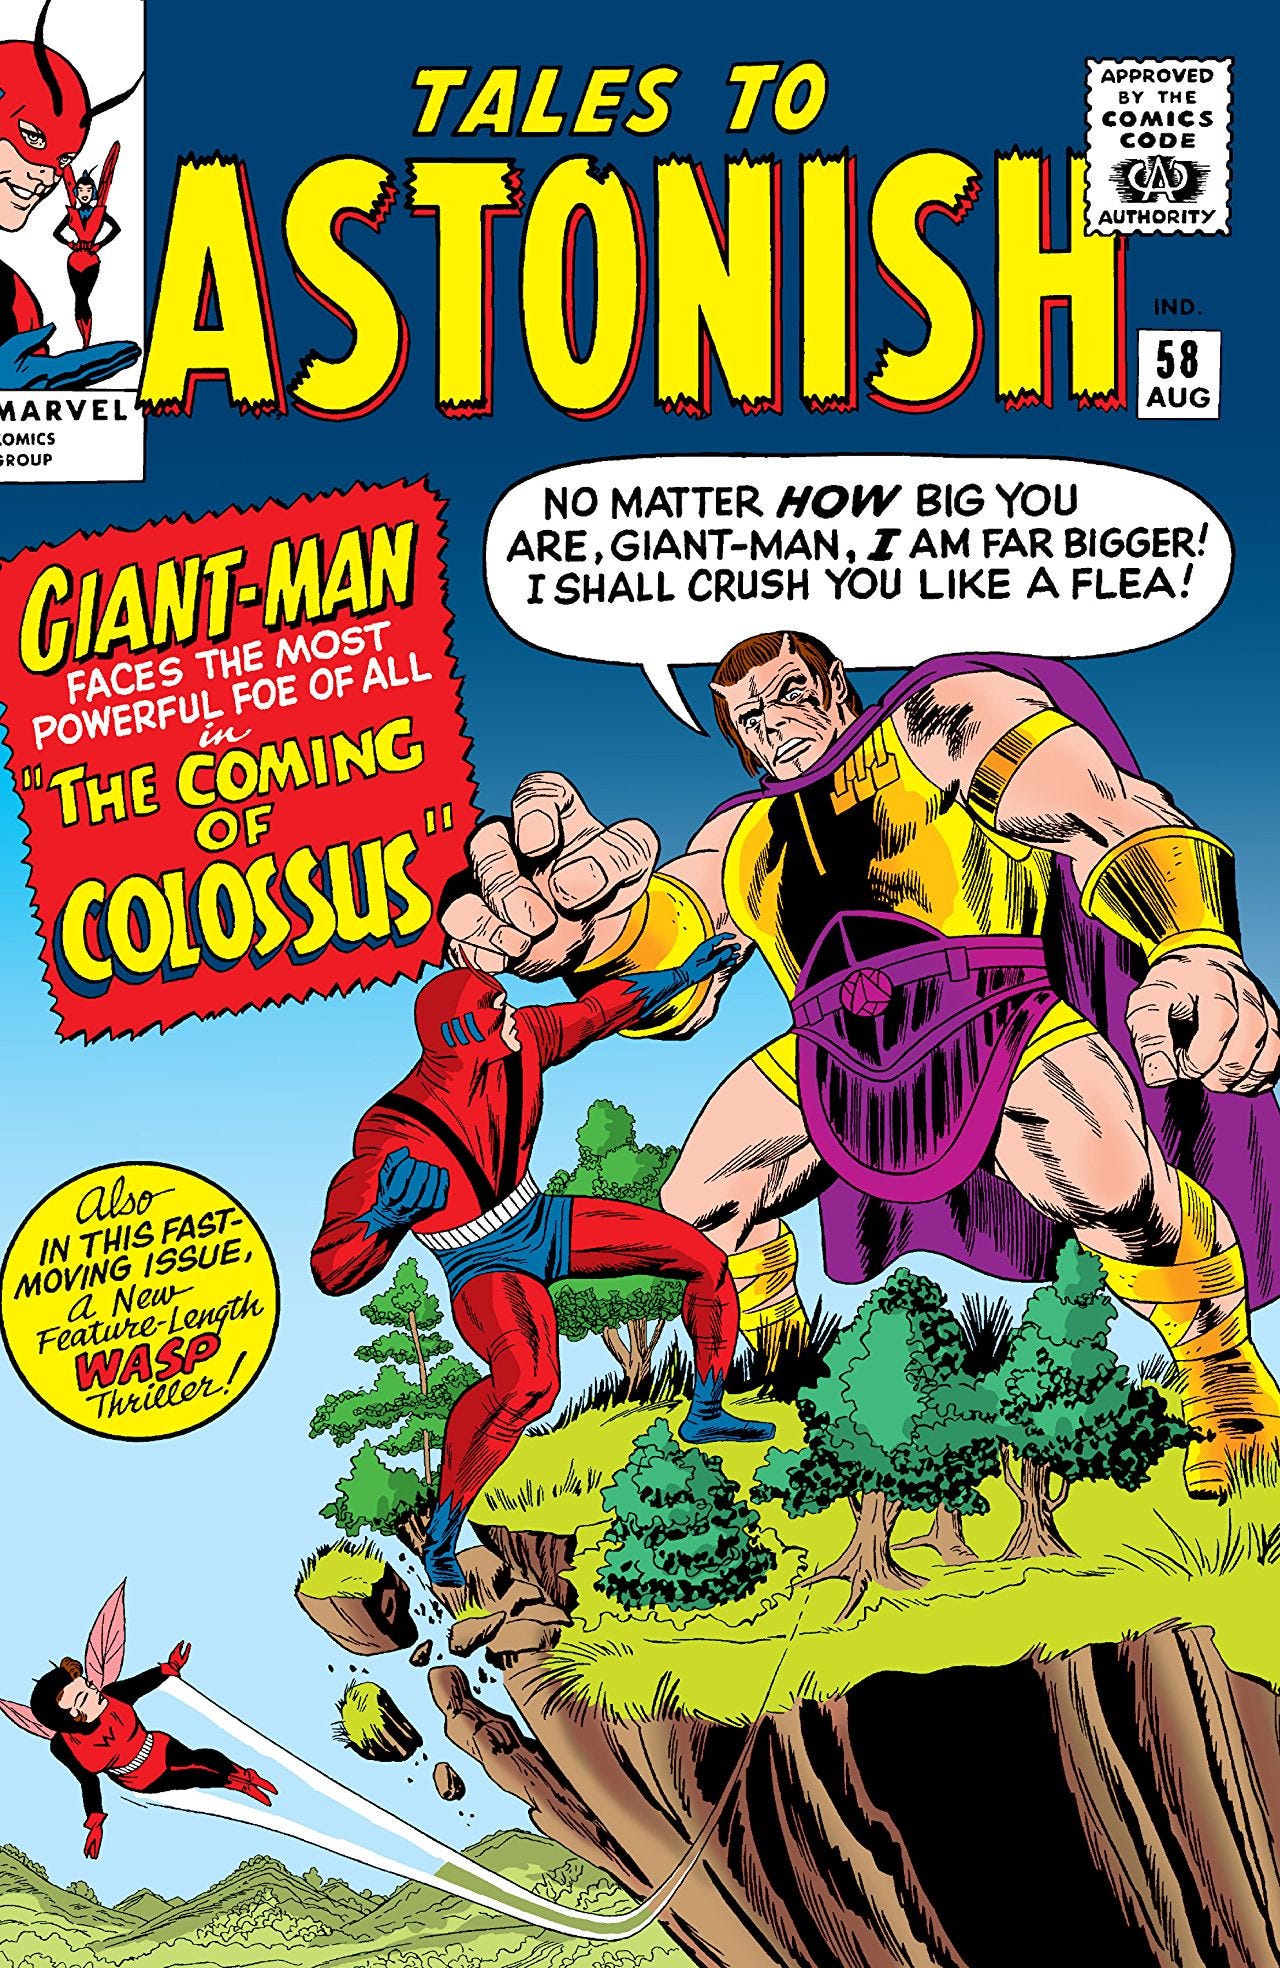 Tales to Astonish Vol 1 58 | Marvel Database | Fandom